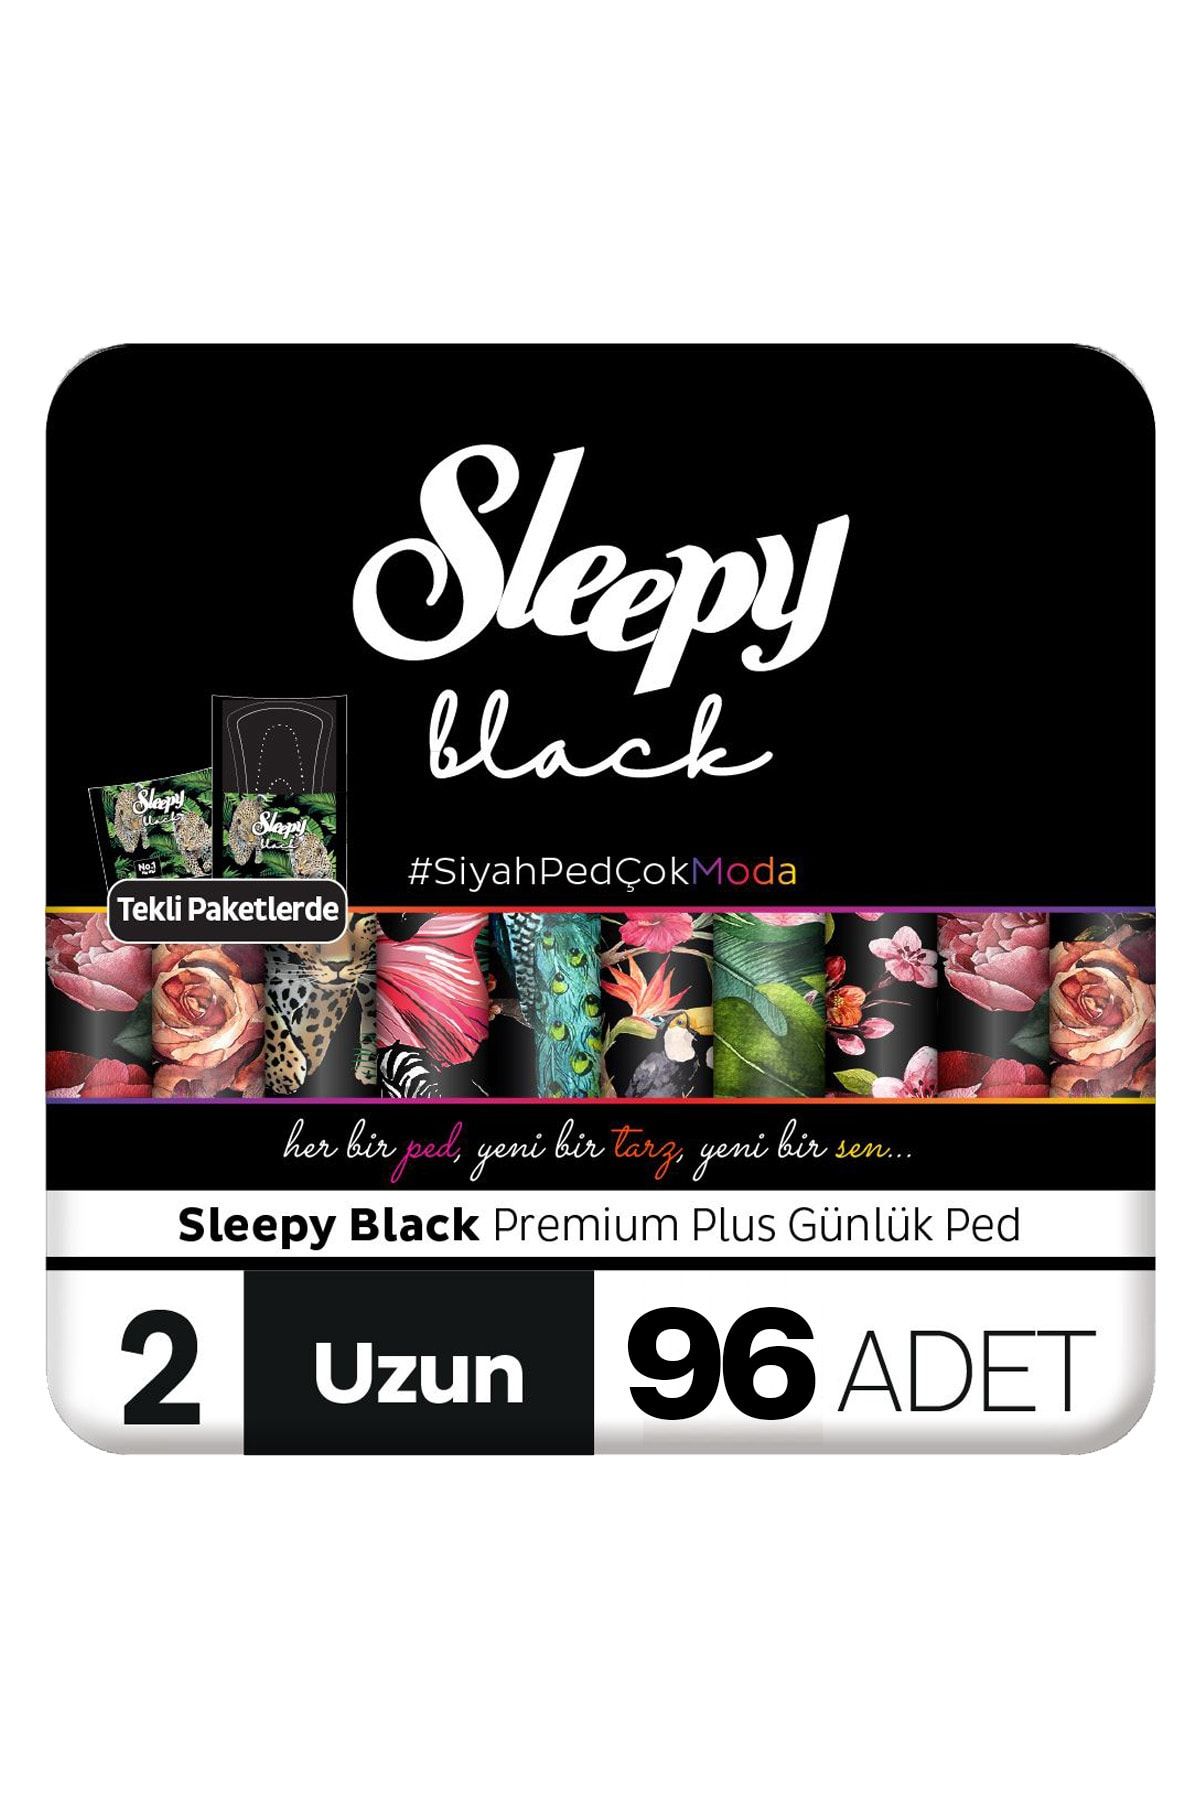 Sleepy Black Premium Plus Günlük Ped Uzun 96 Adet Ped